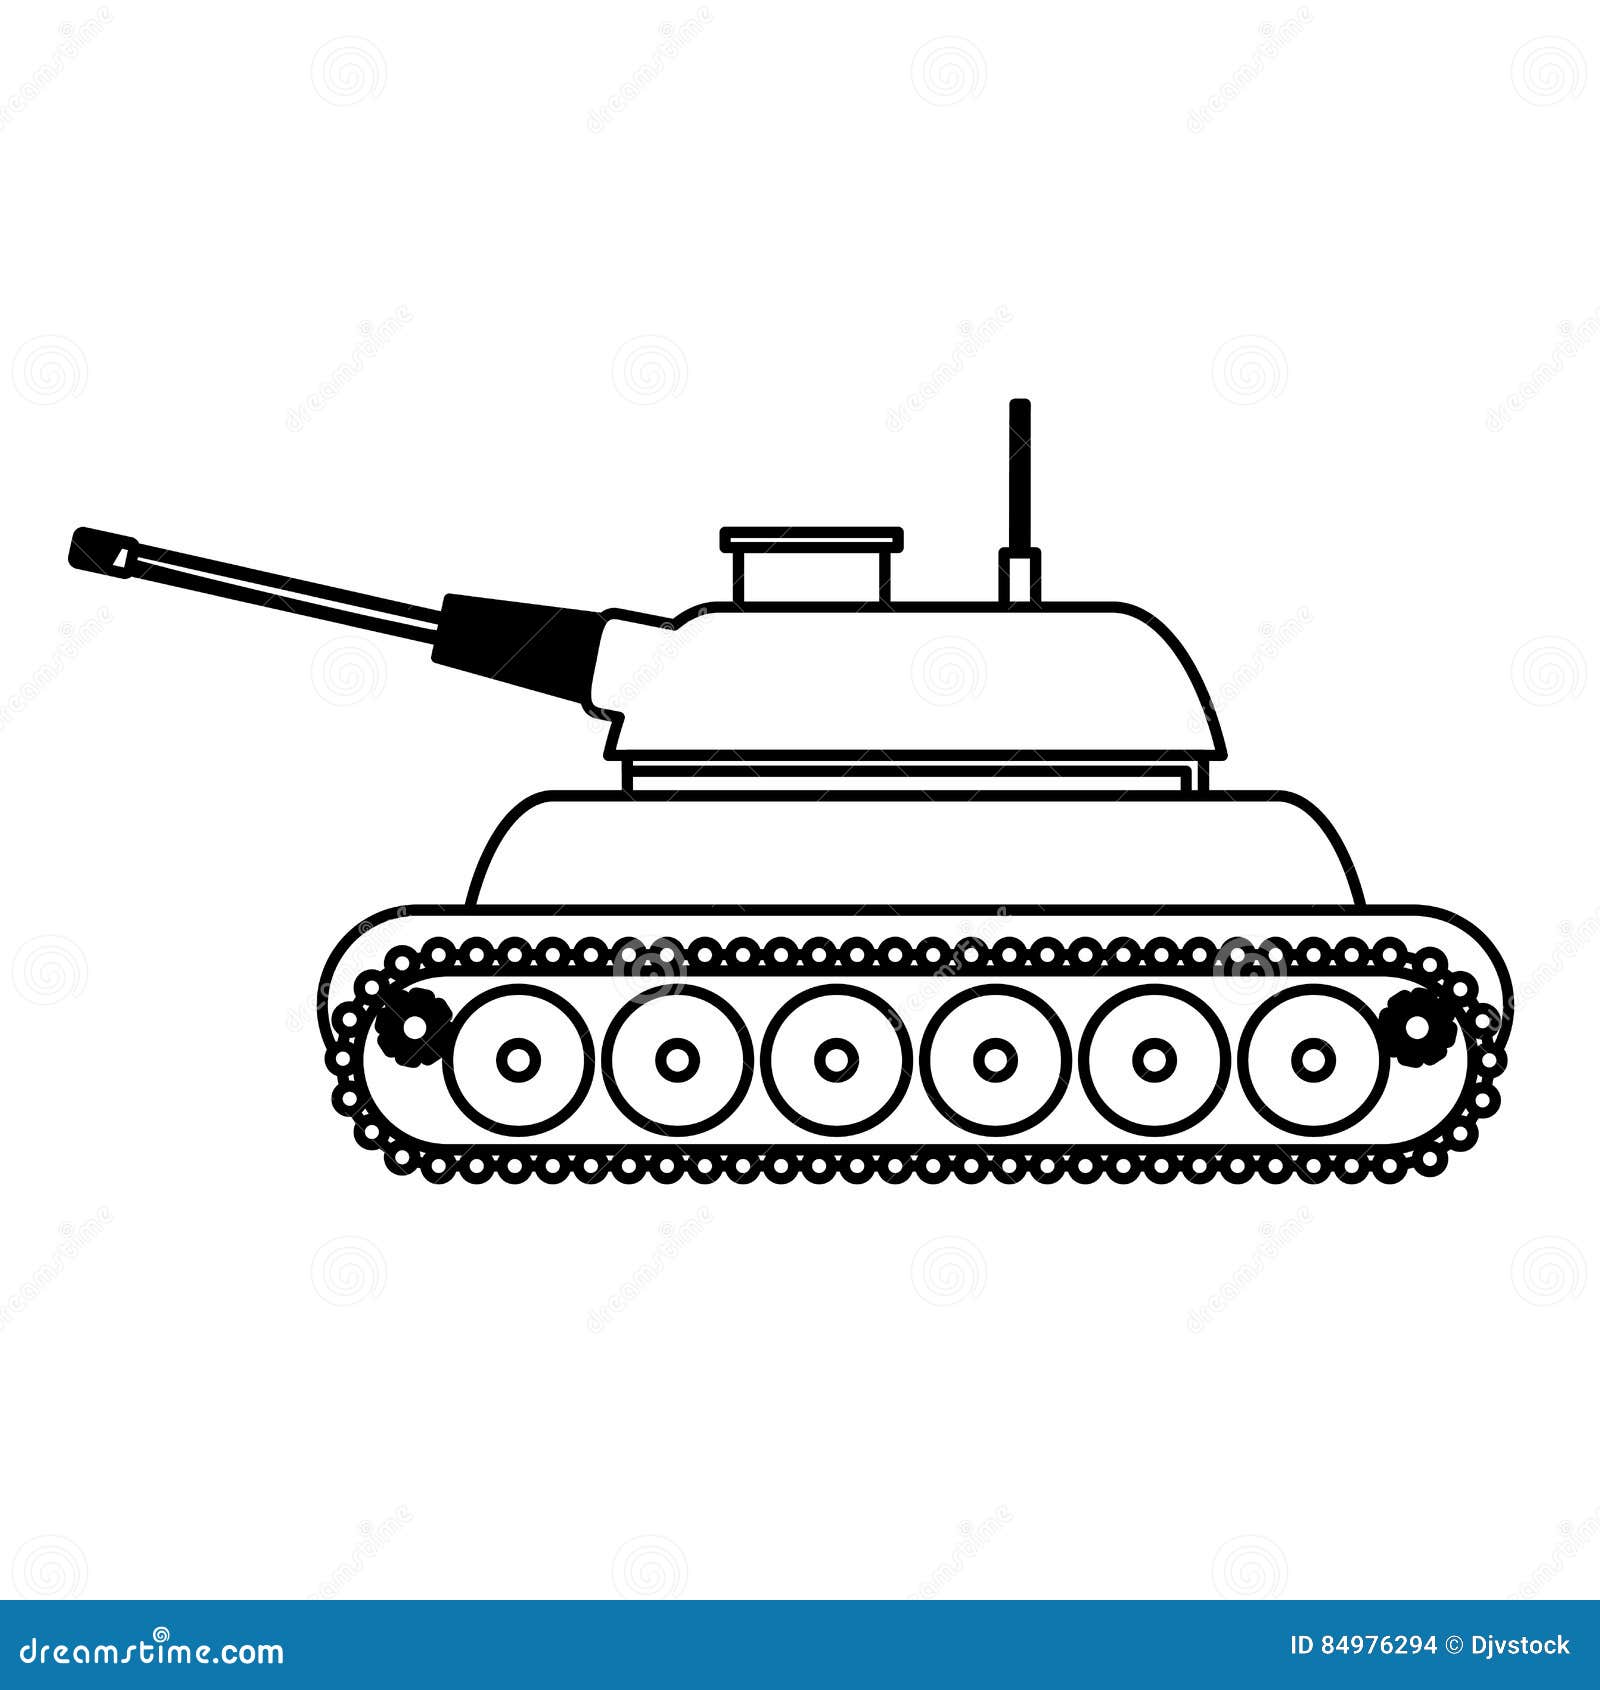 6,206 War Tank Outline Images, Stock Photos, 3D objects, & Vectors